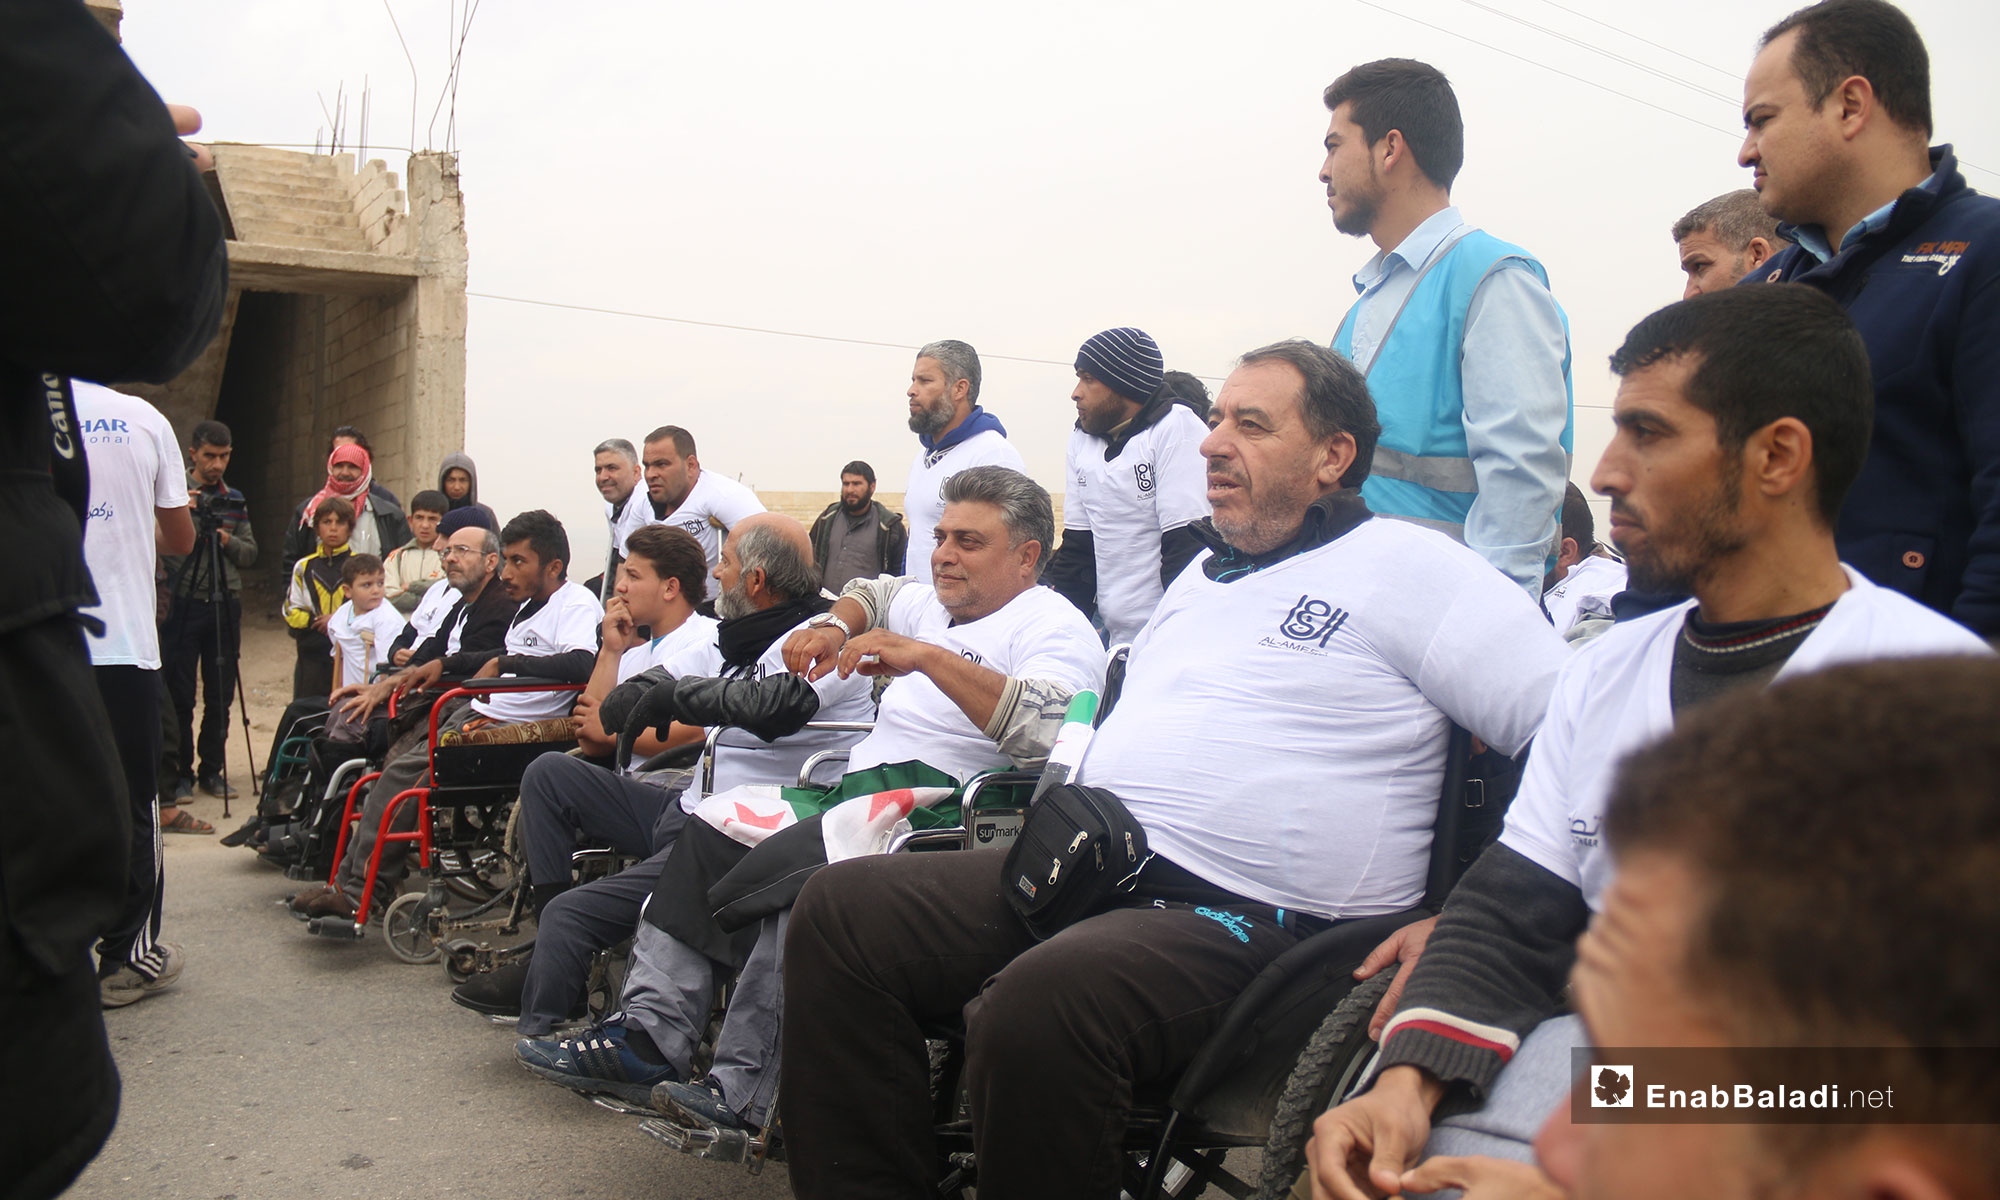 Marathon for people with disabilities and students in rural Idlib – November 22, 2018 (Enab Baladi)